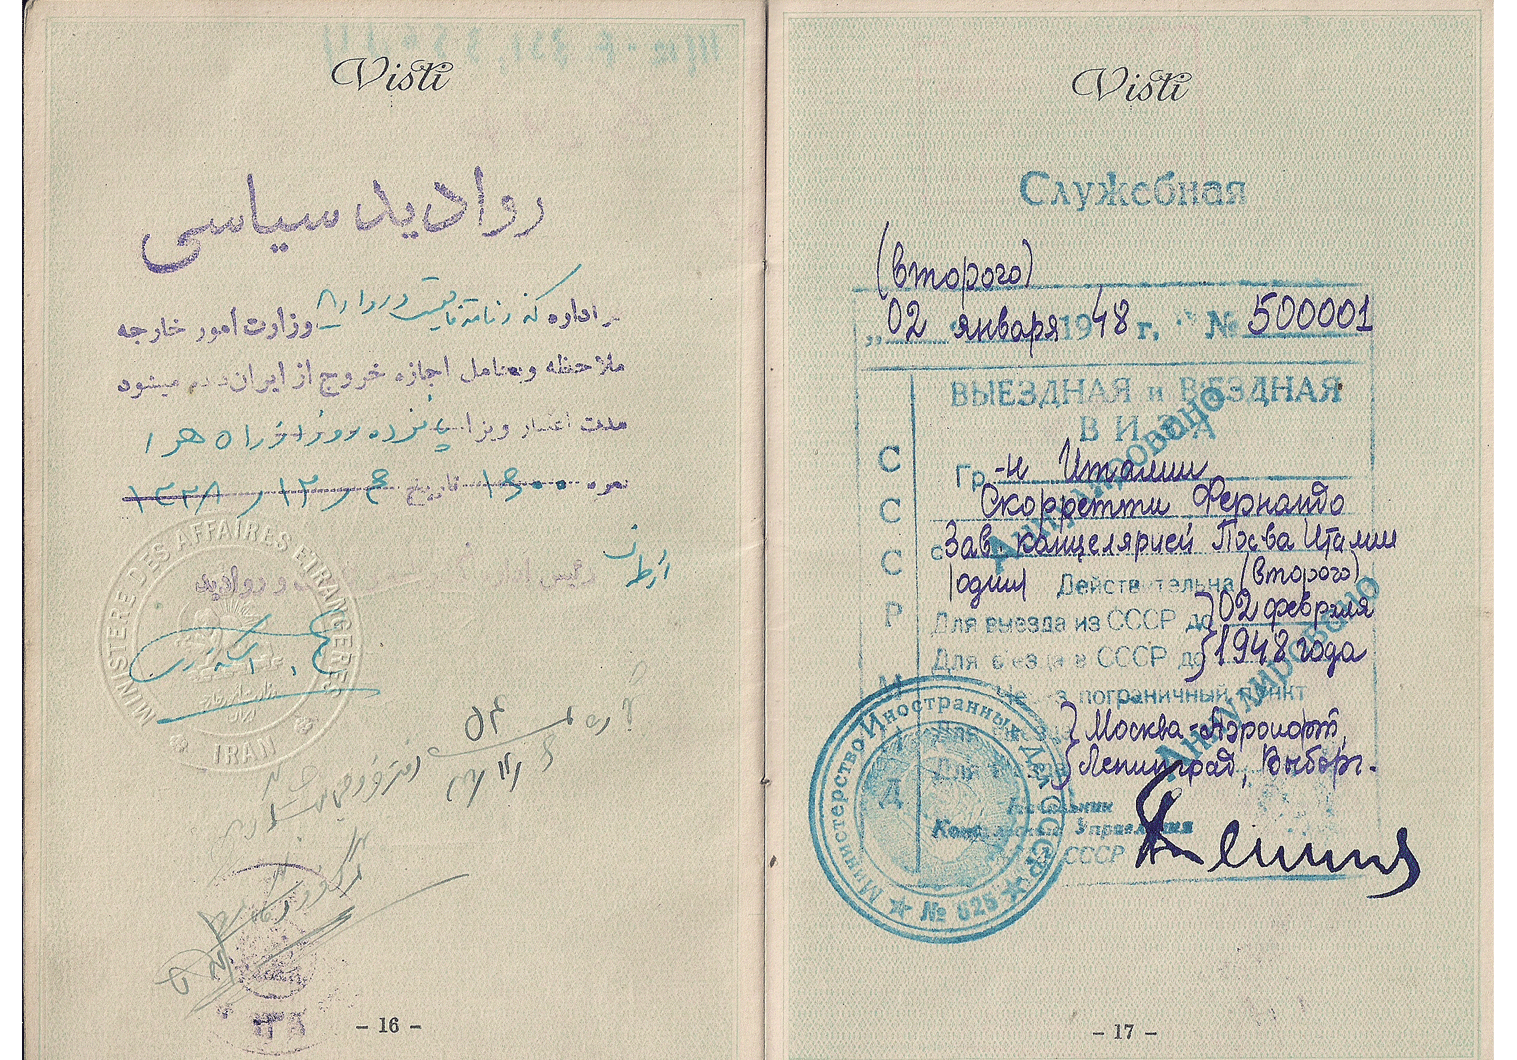 Post-WW2 diplomatic passport